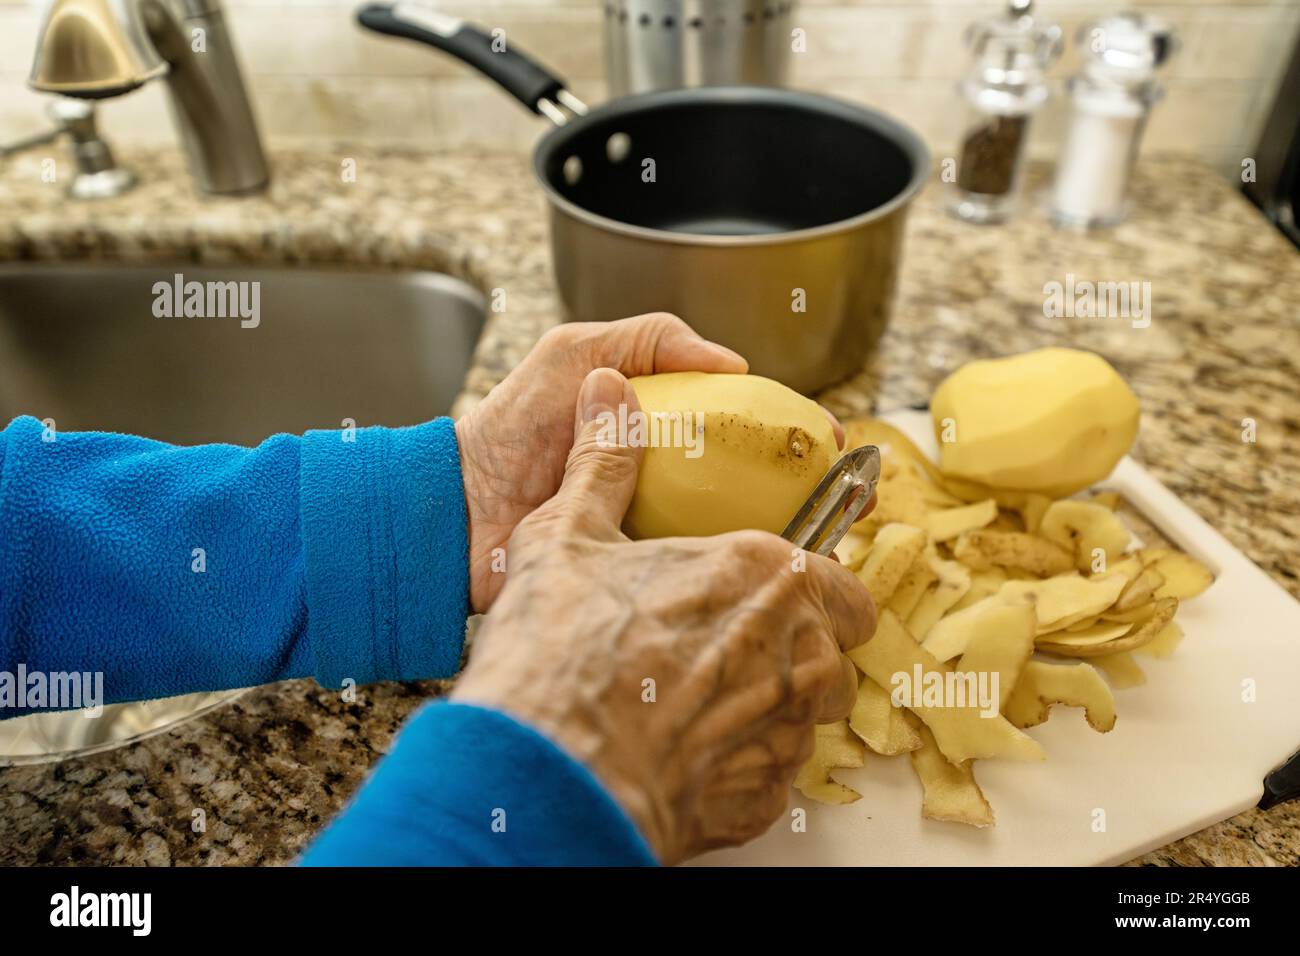 Elderly Woman Hands Peeling Potatoes Stock Photo